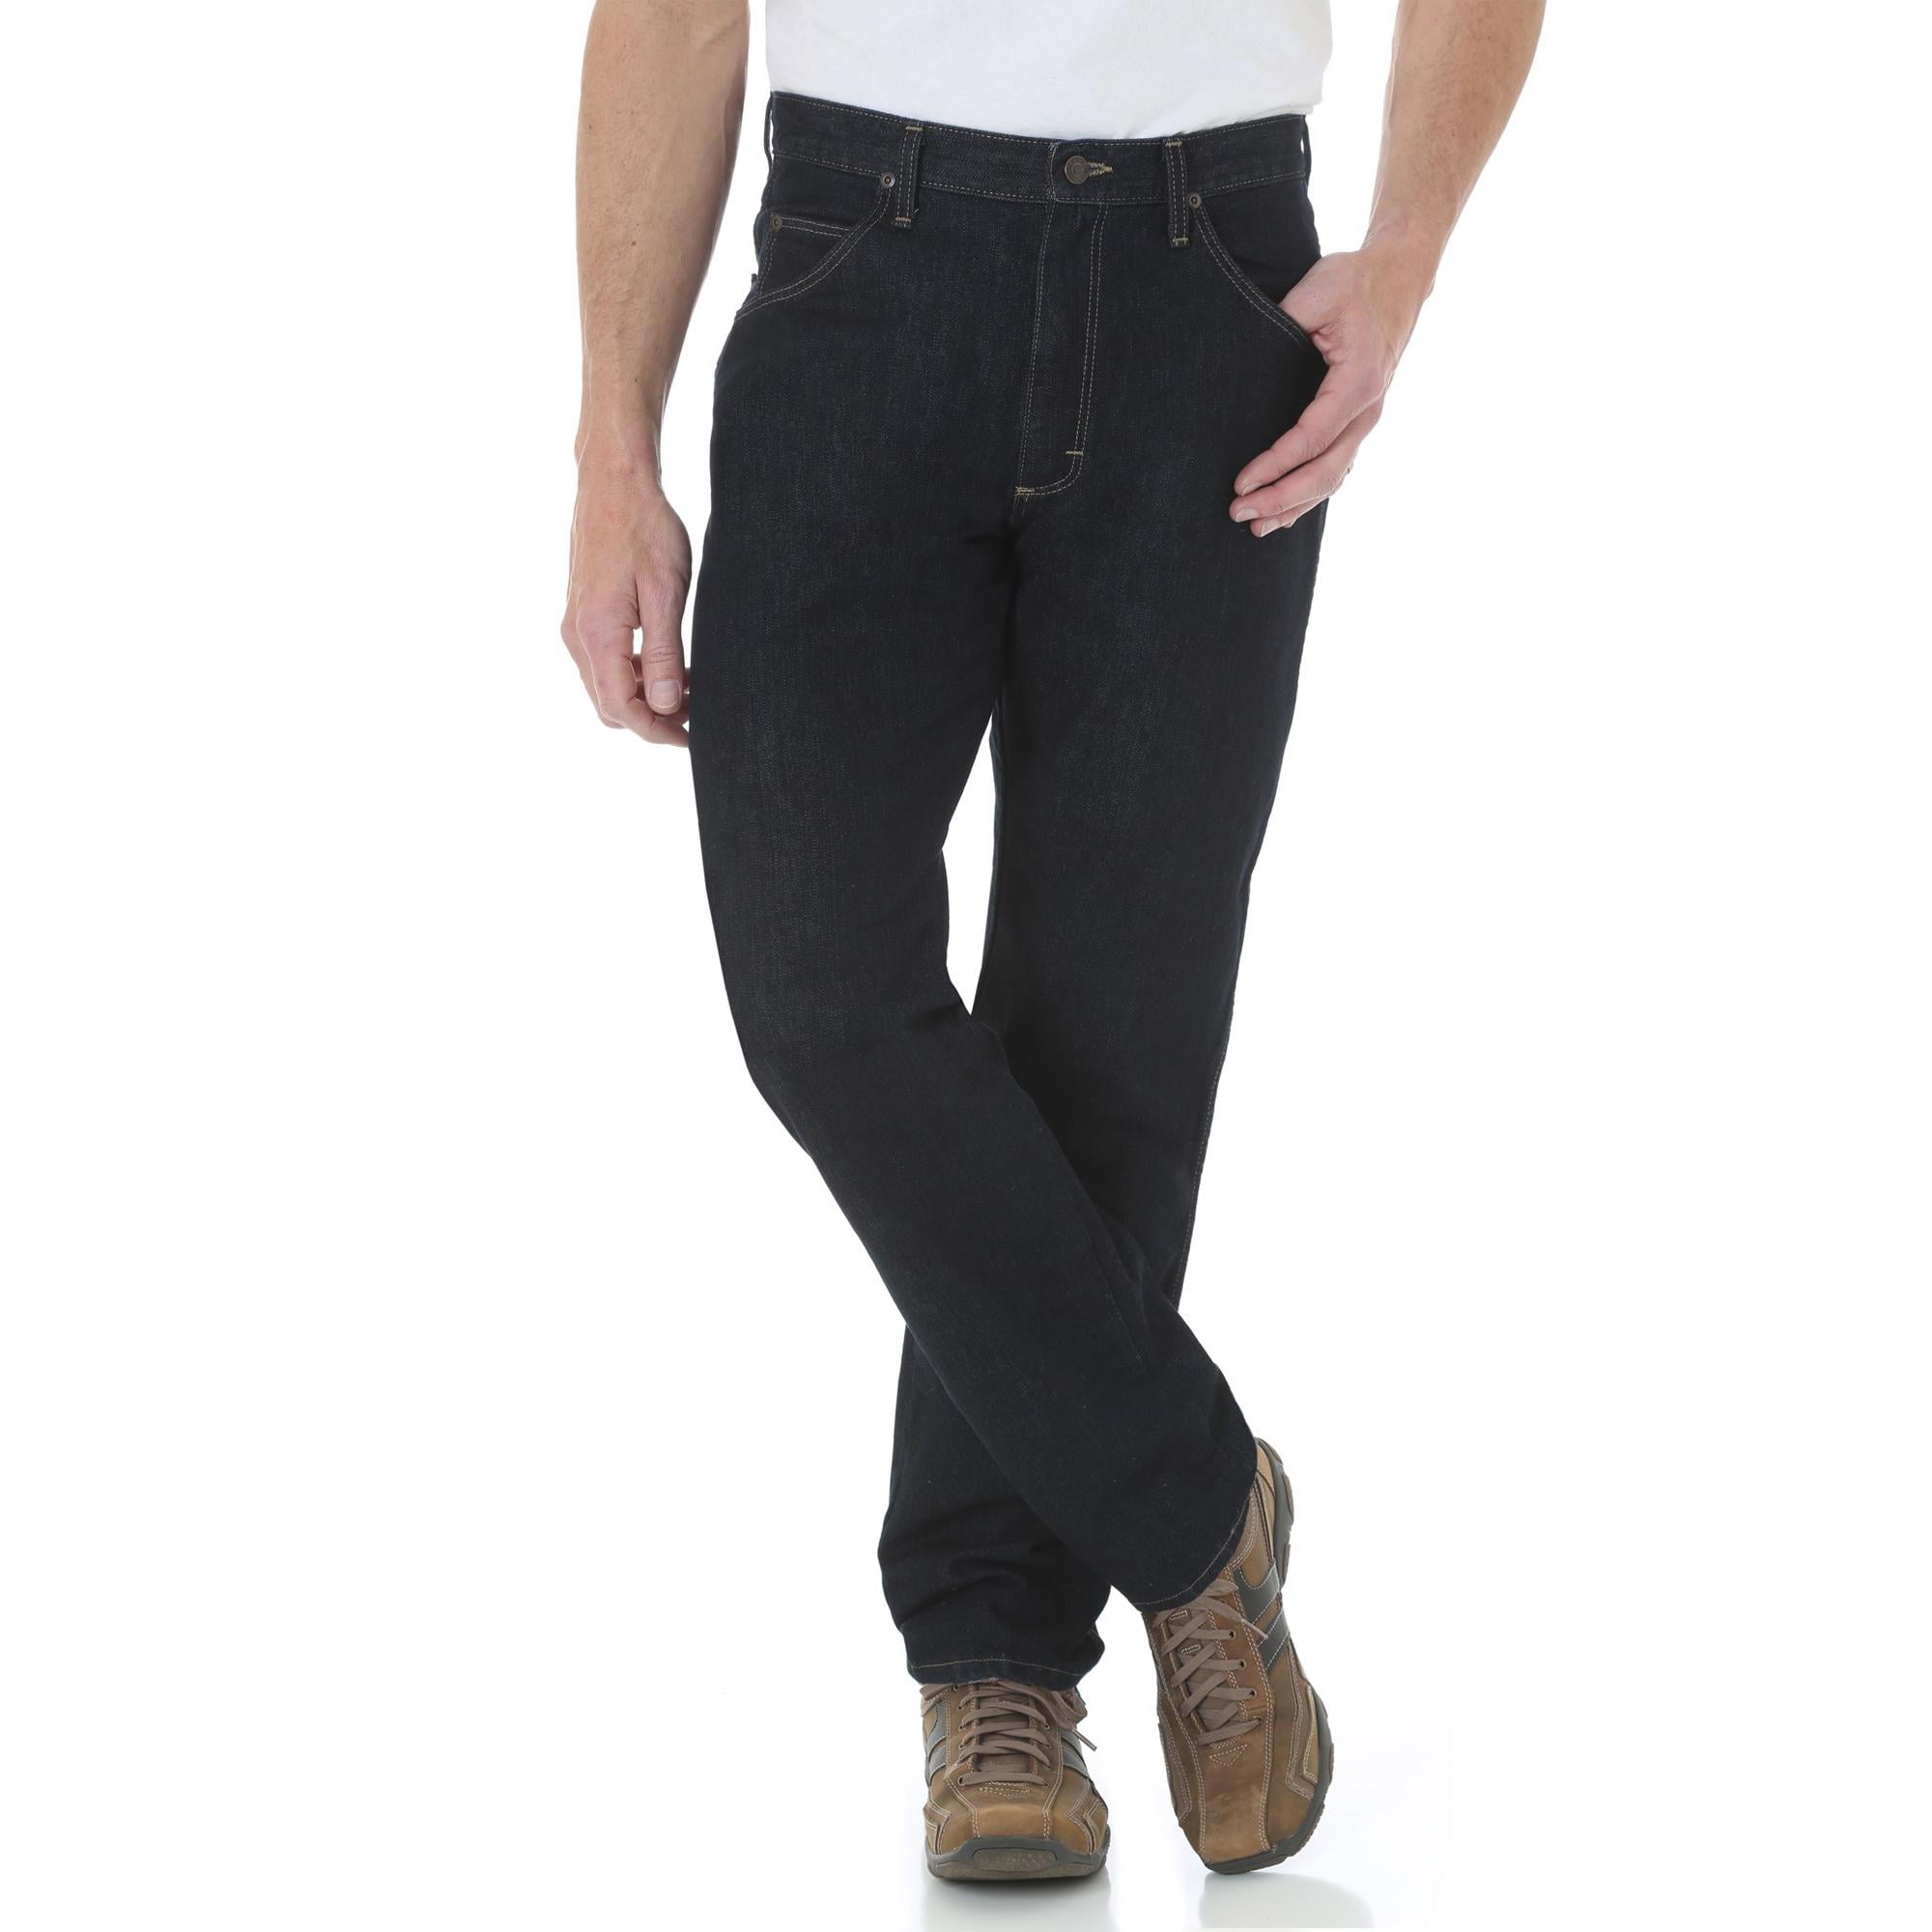 Wrangler Husky Jeans Size Chart